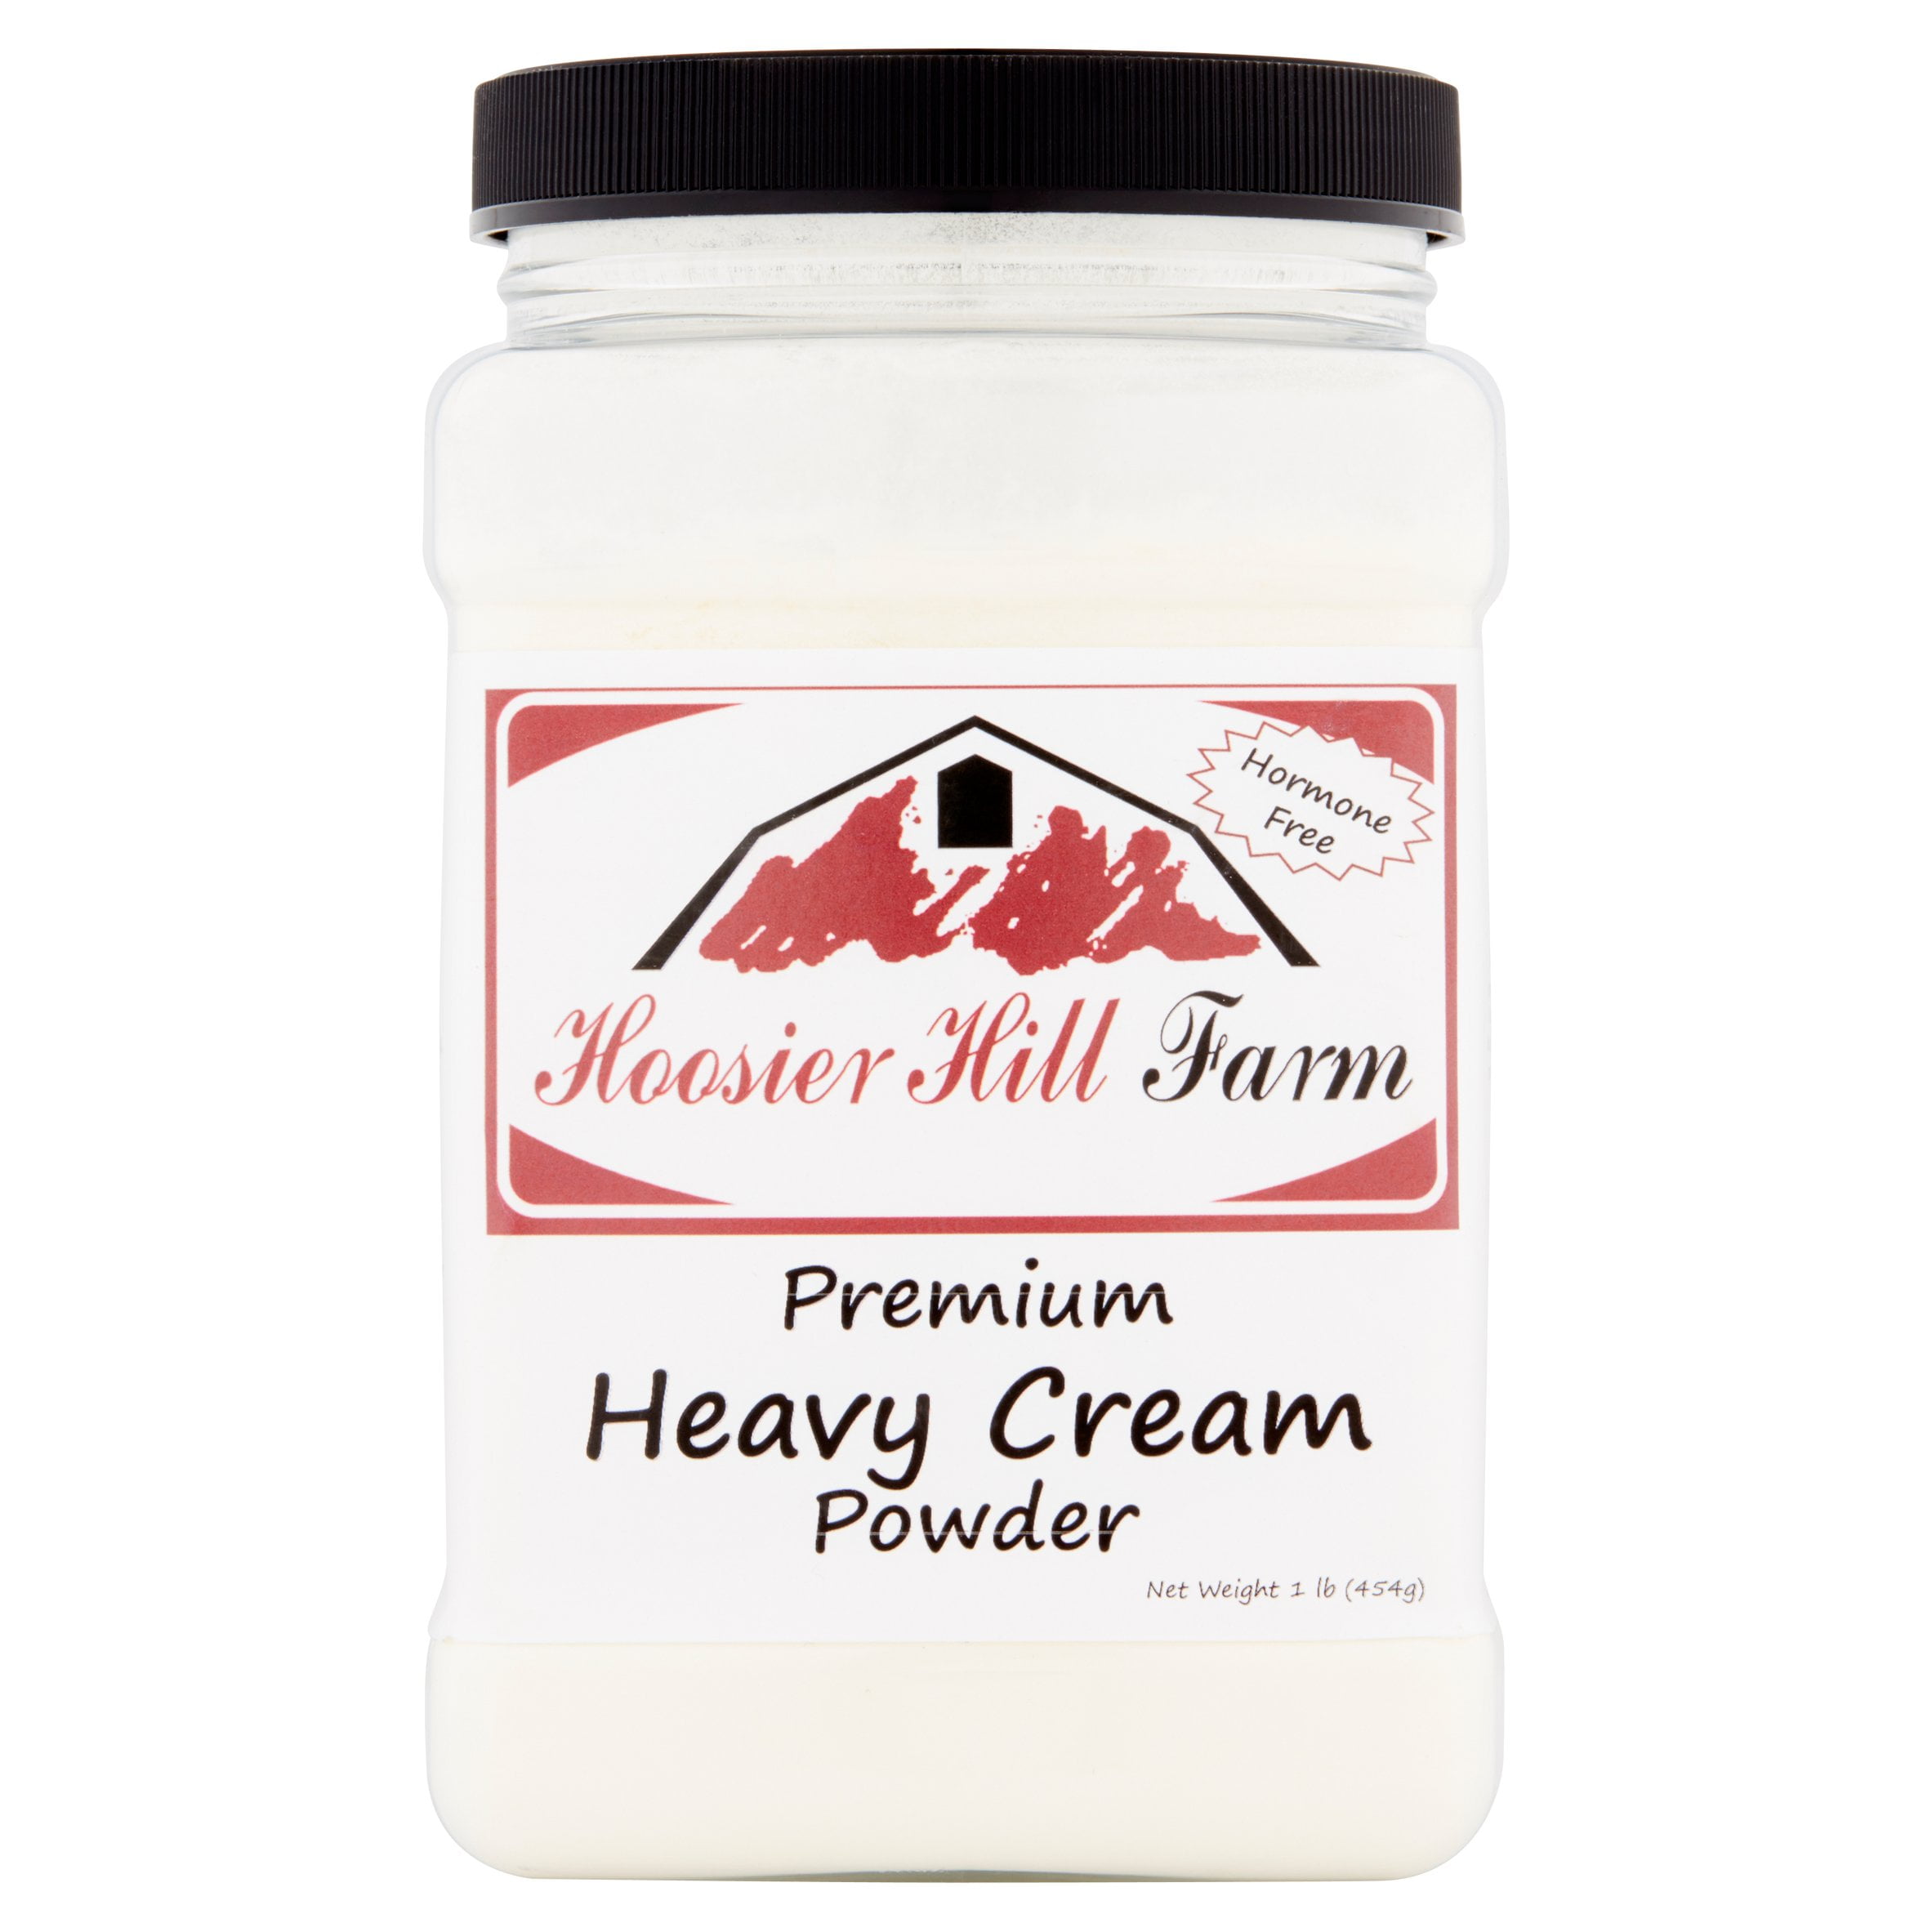 Hoosier Hill Farm Heavy Cream Powder, Gluten Free and Hormone Free. 2 lbs.